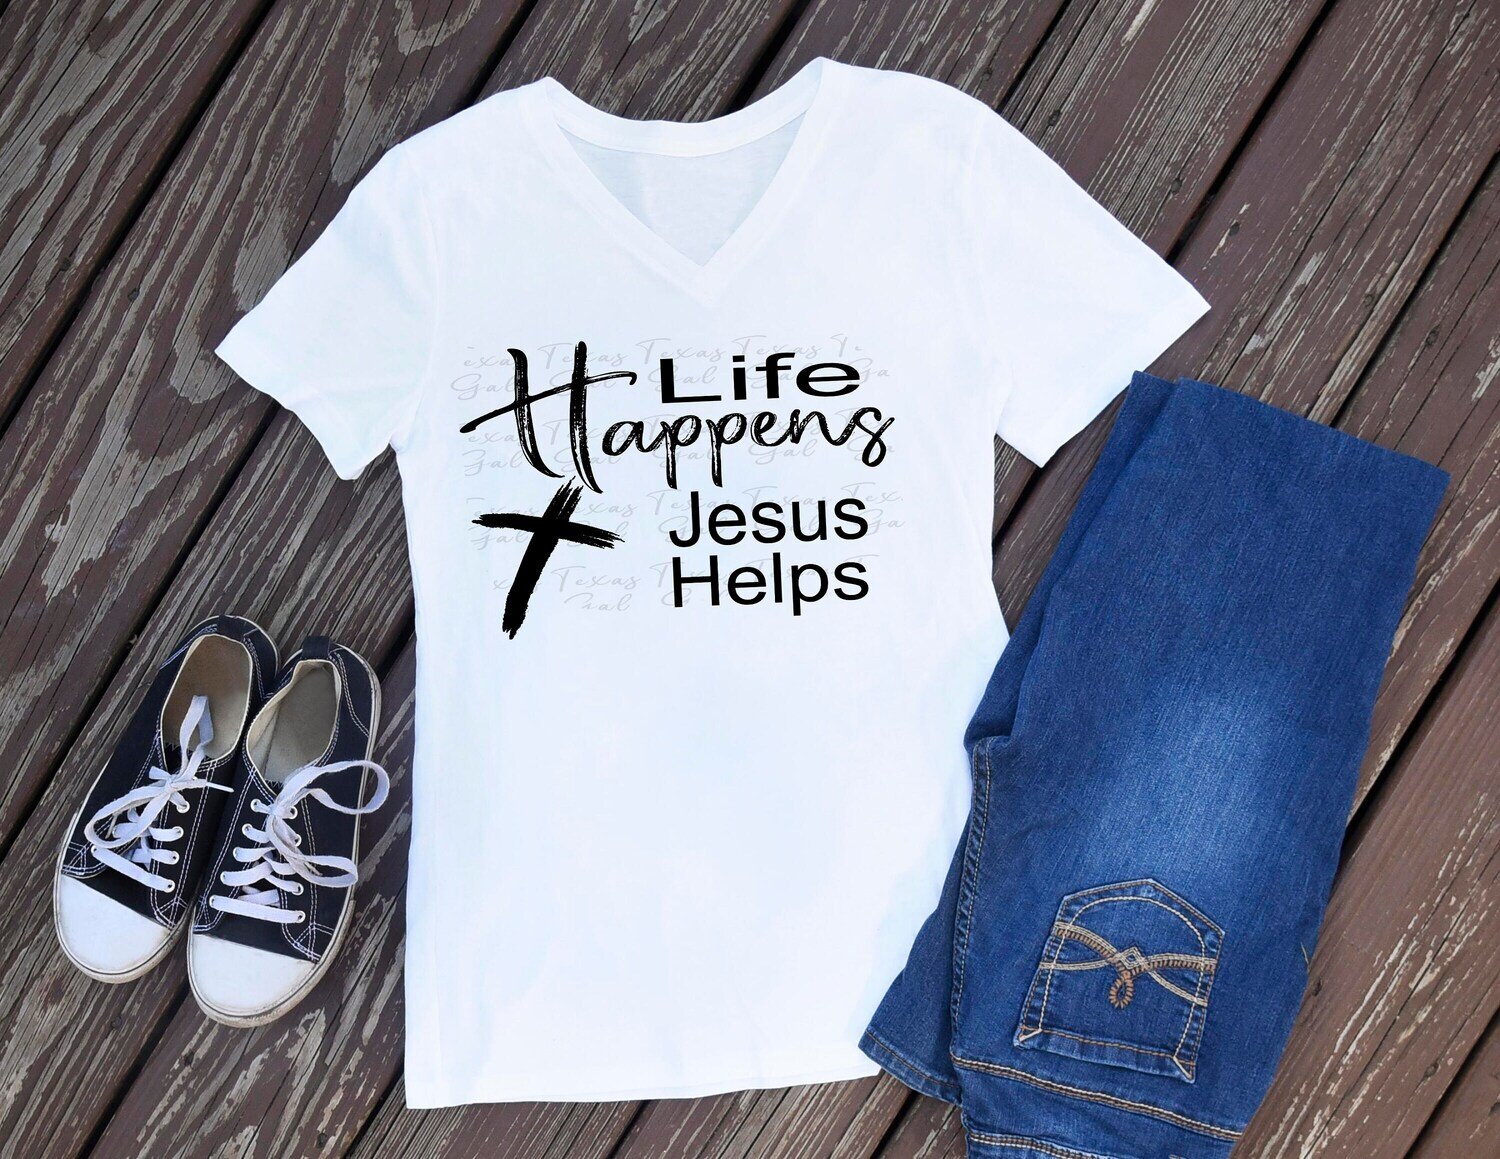 Life happens, Jesus, T-shirt, PNG, sublimation, digital download